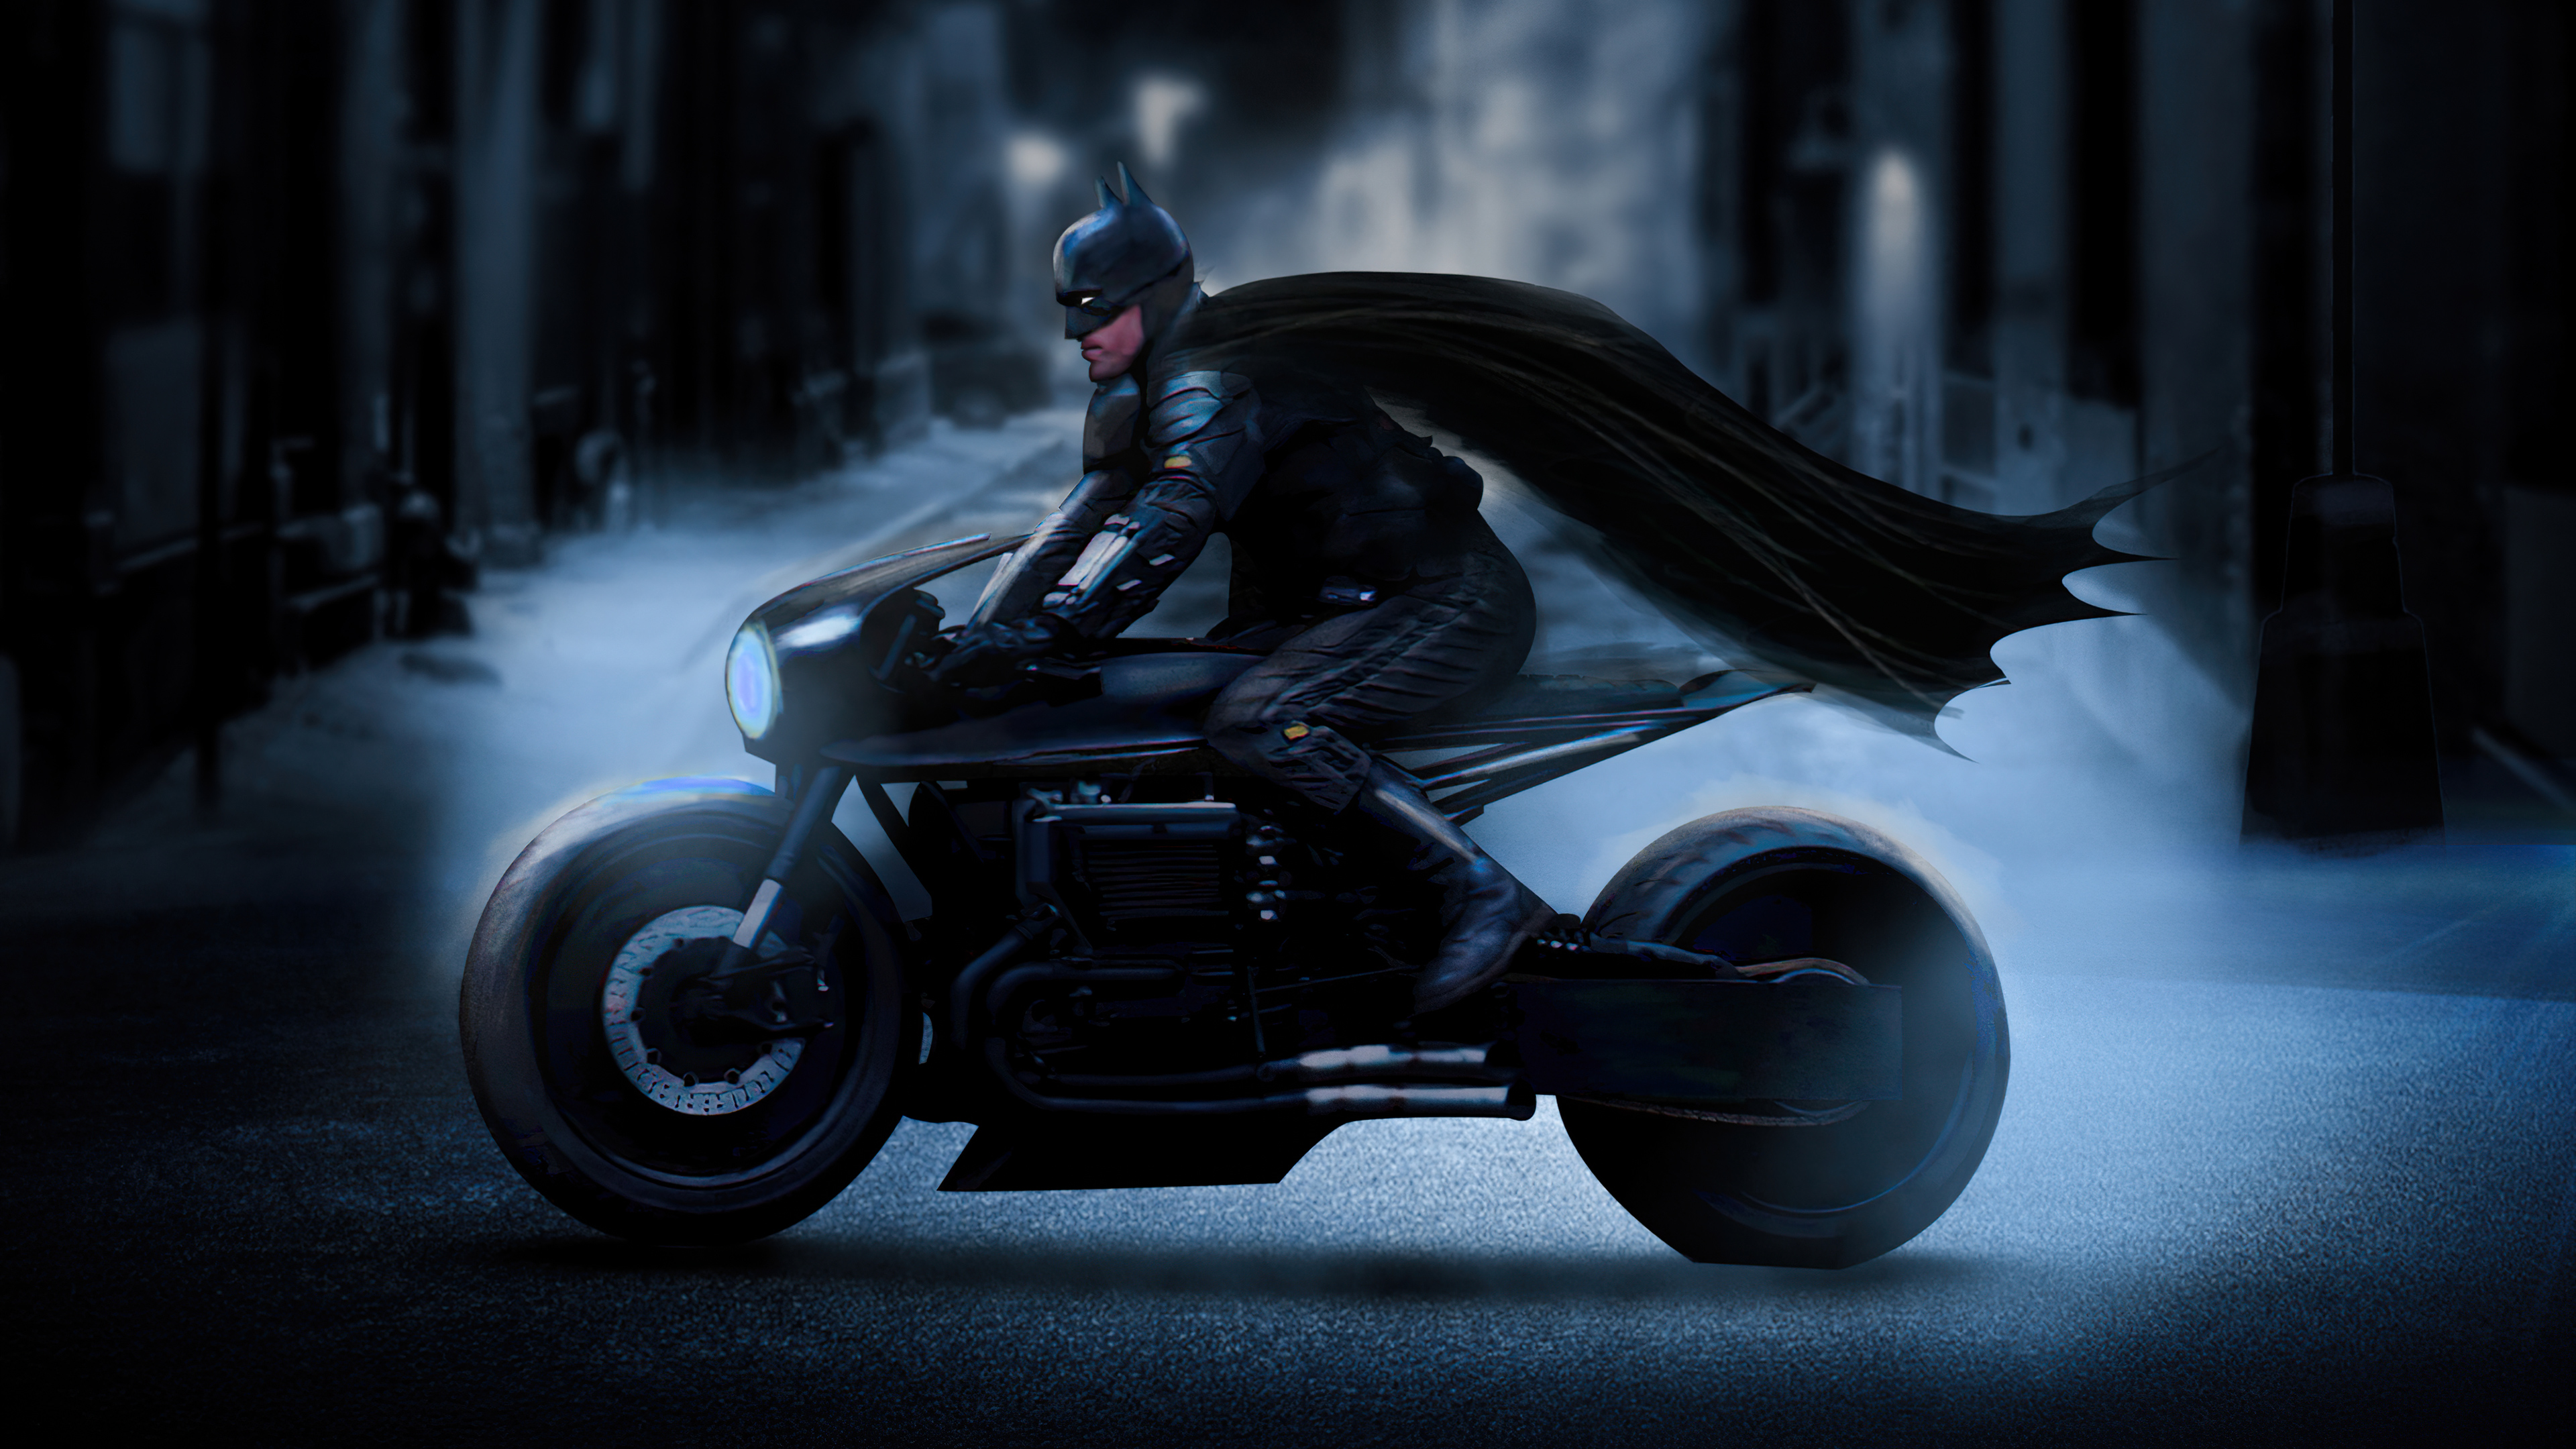 The Batman 4k Ultra HD Wallpaper